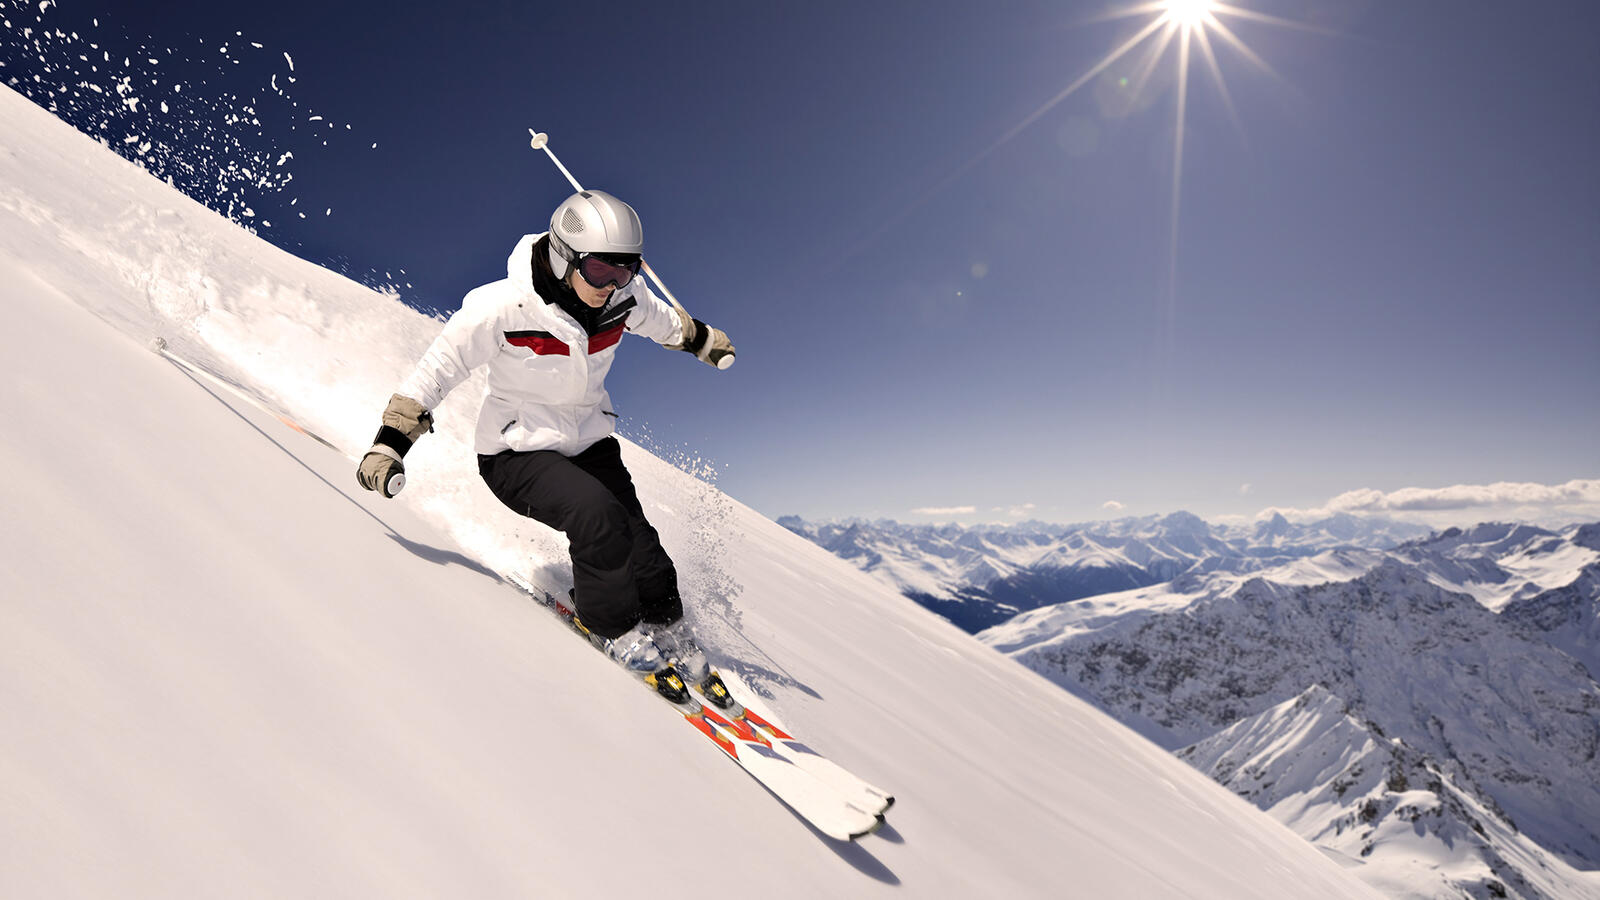 Wallpapers skier skis mountains on the desktop